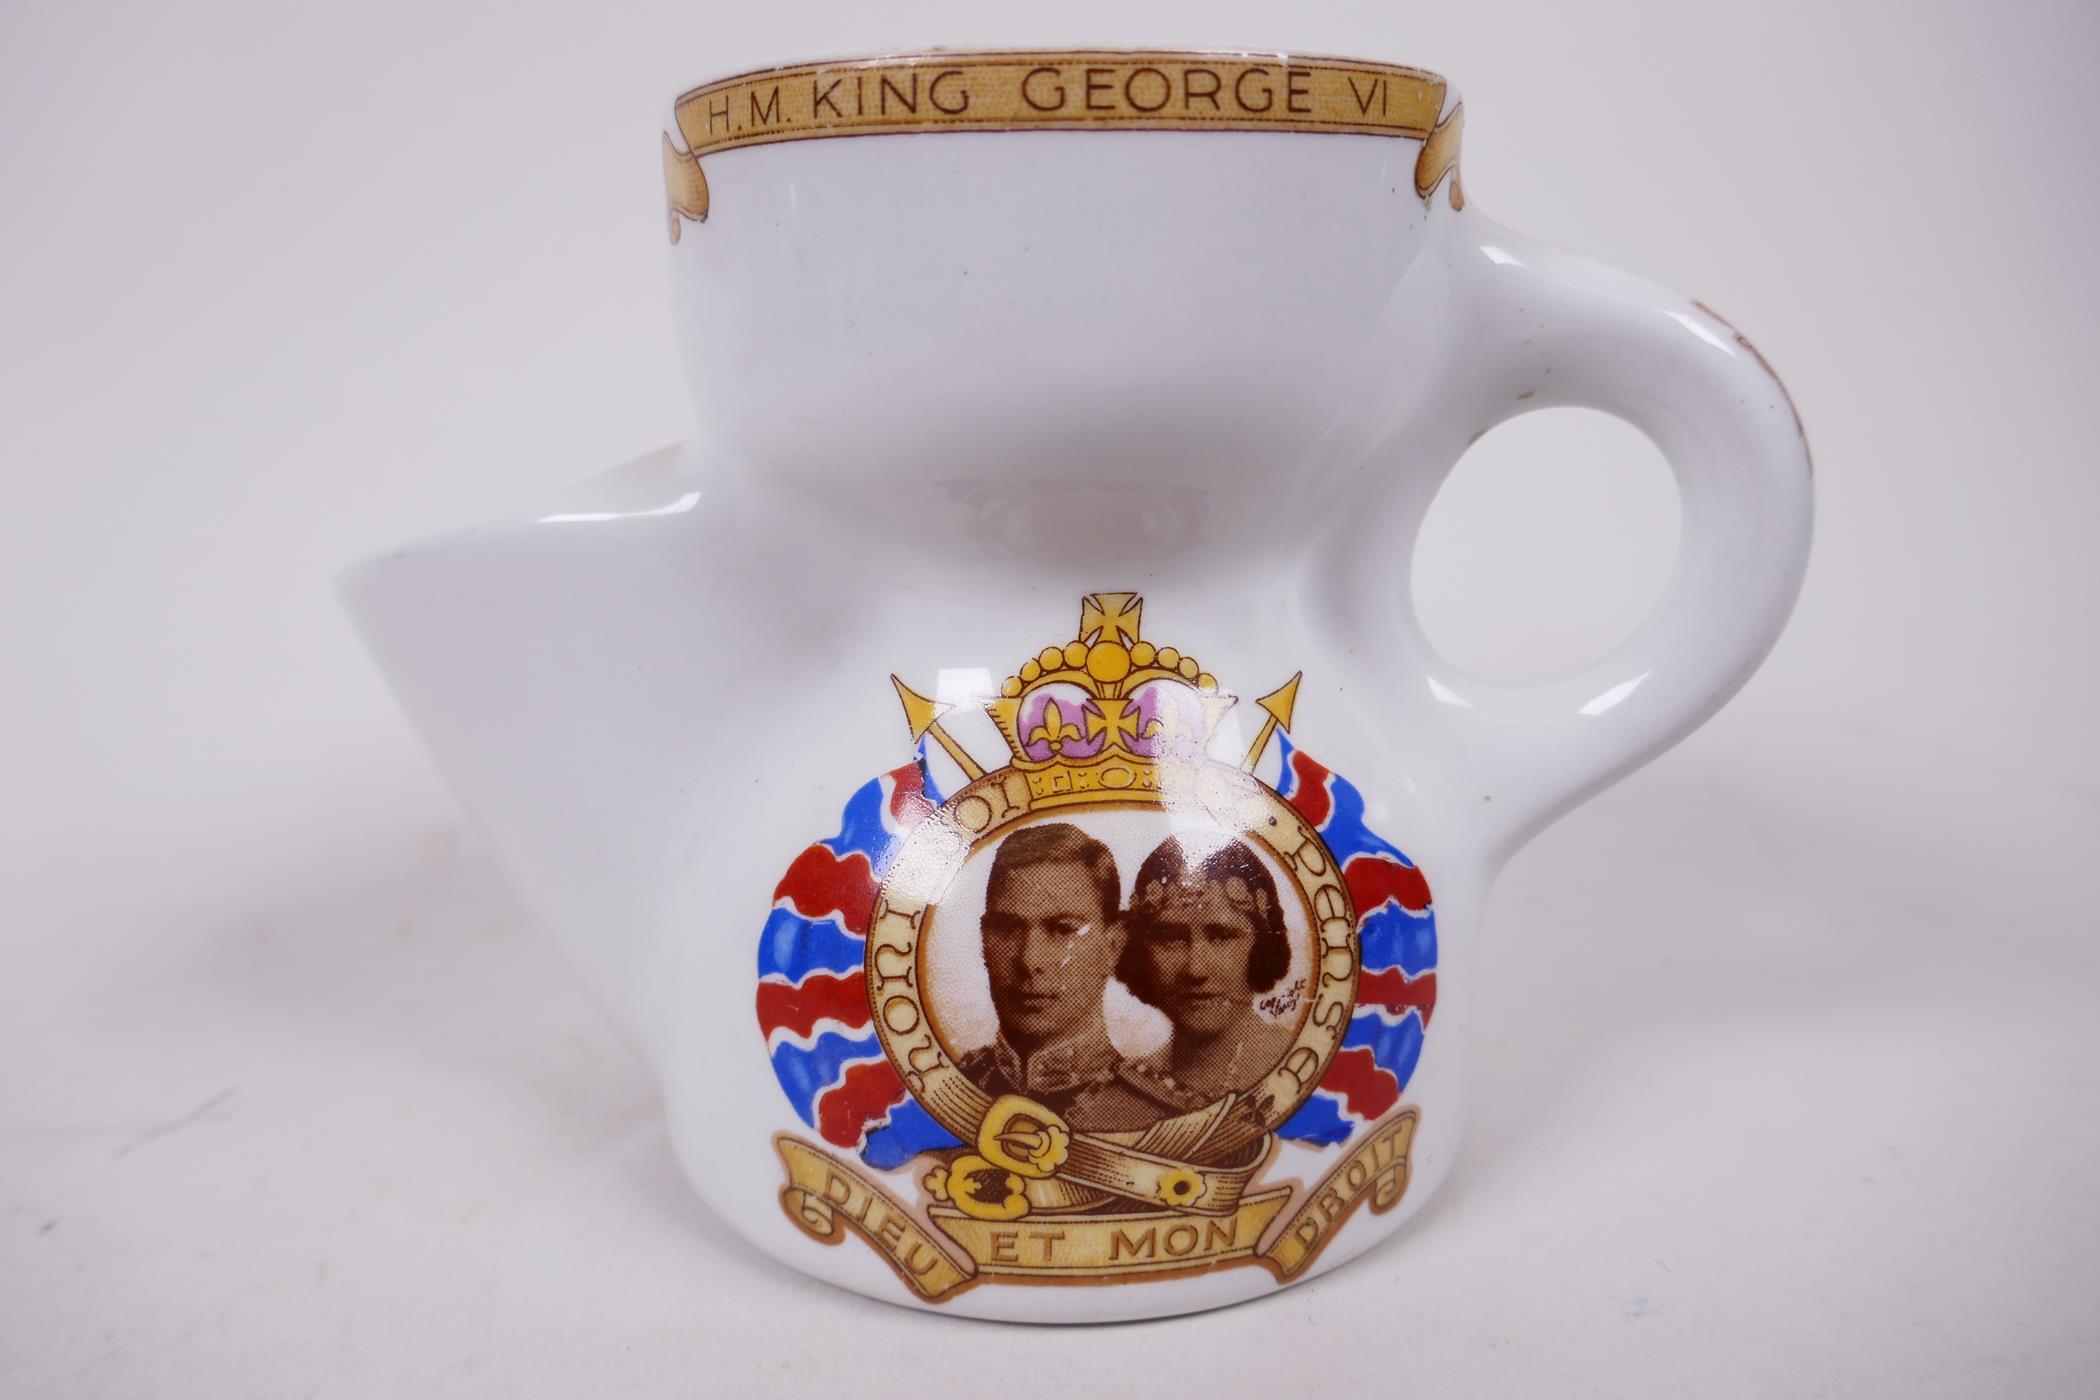 Three 1937 commemorative coronation shaving mugs, cream and white glazed ceramic - Image 9 of 11